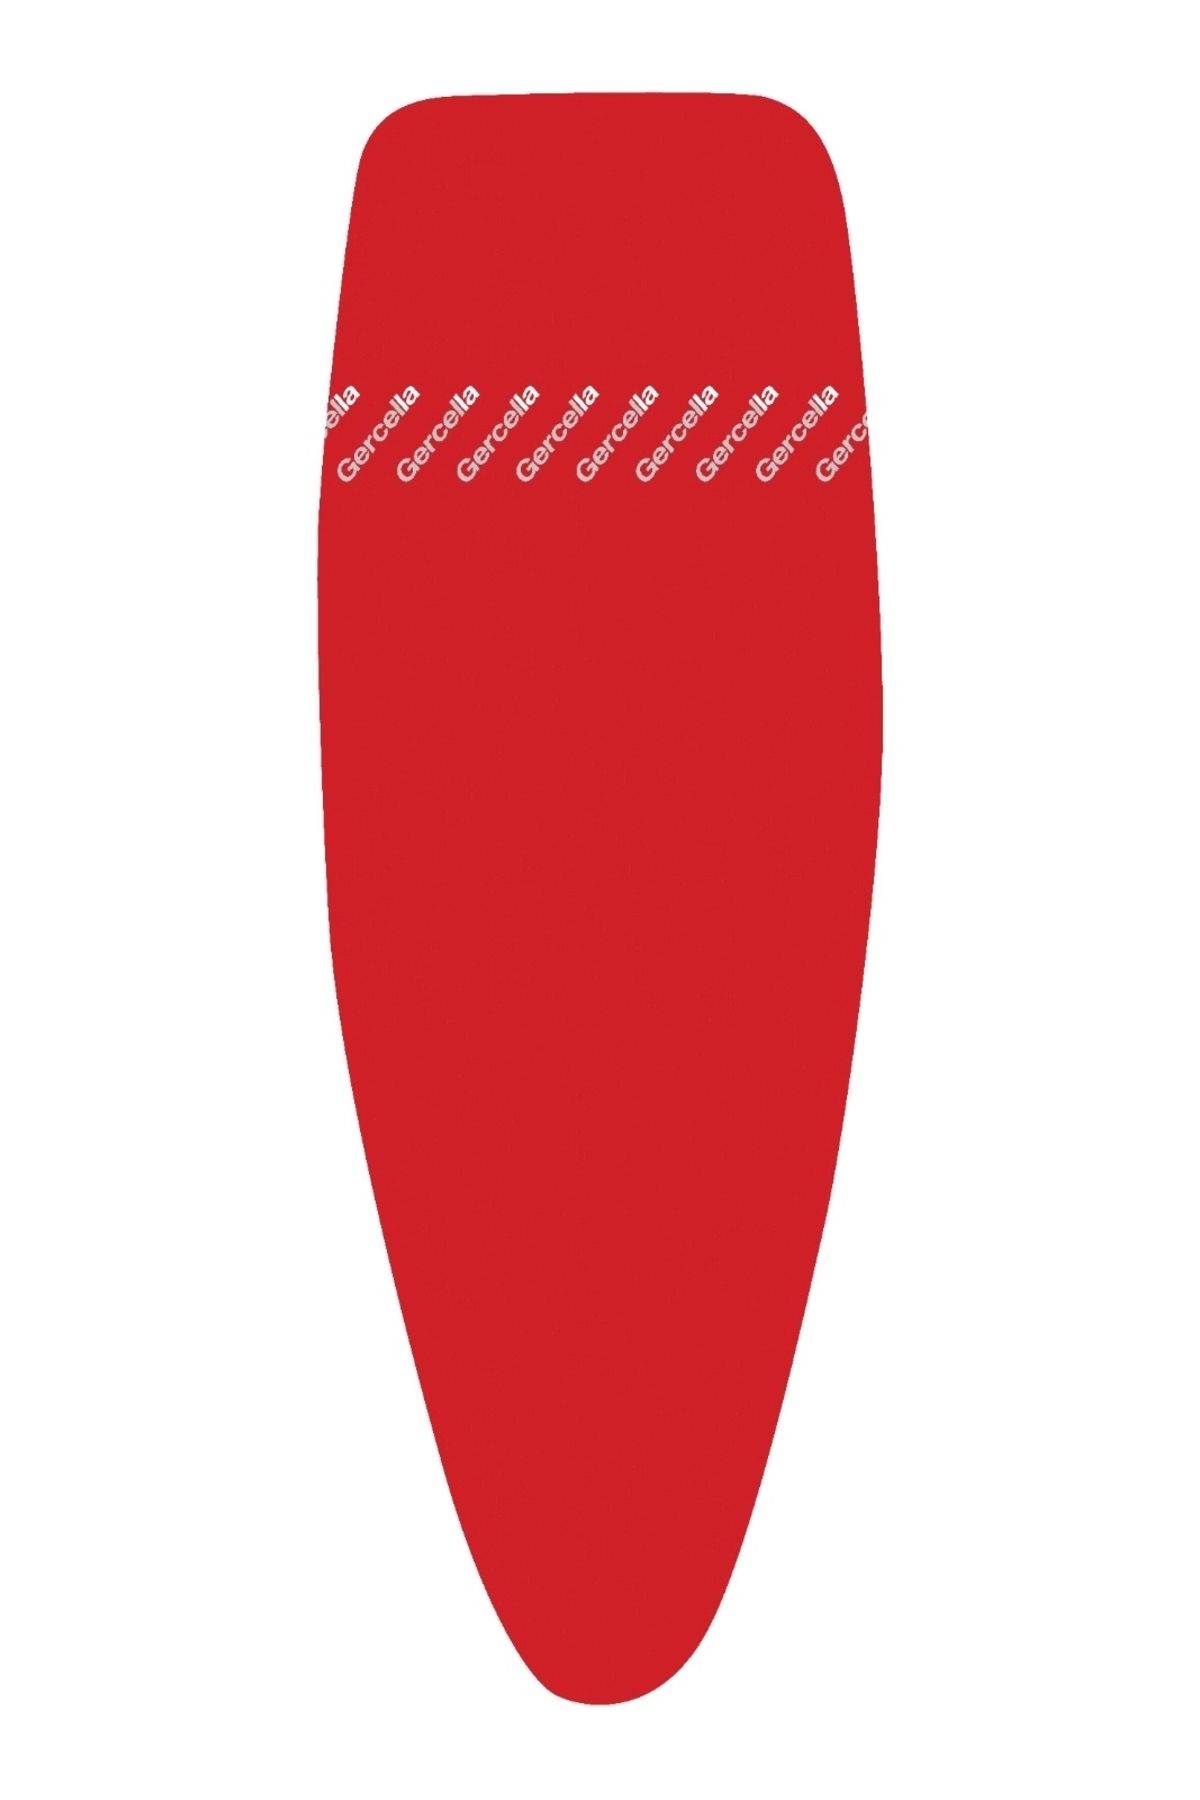 GERCELLA Luxury Ütü Masası Kılıfı Örtüsü Bezi Kırmızı (50*135 CM)